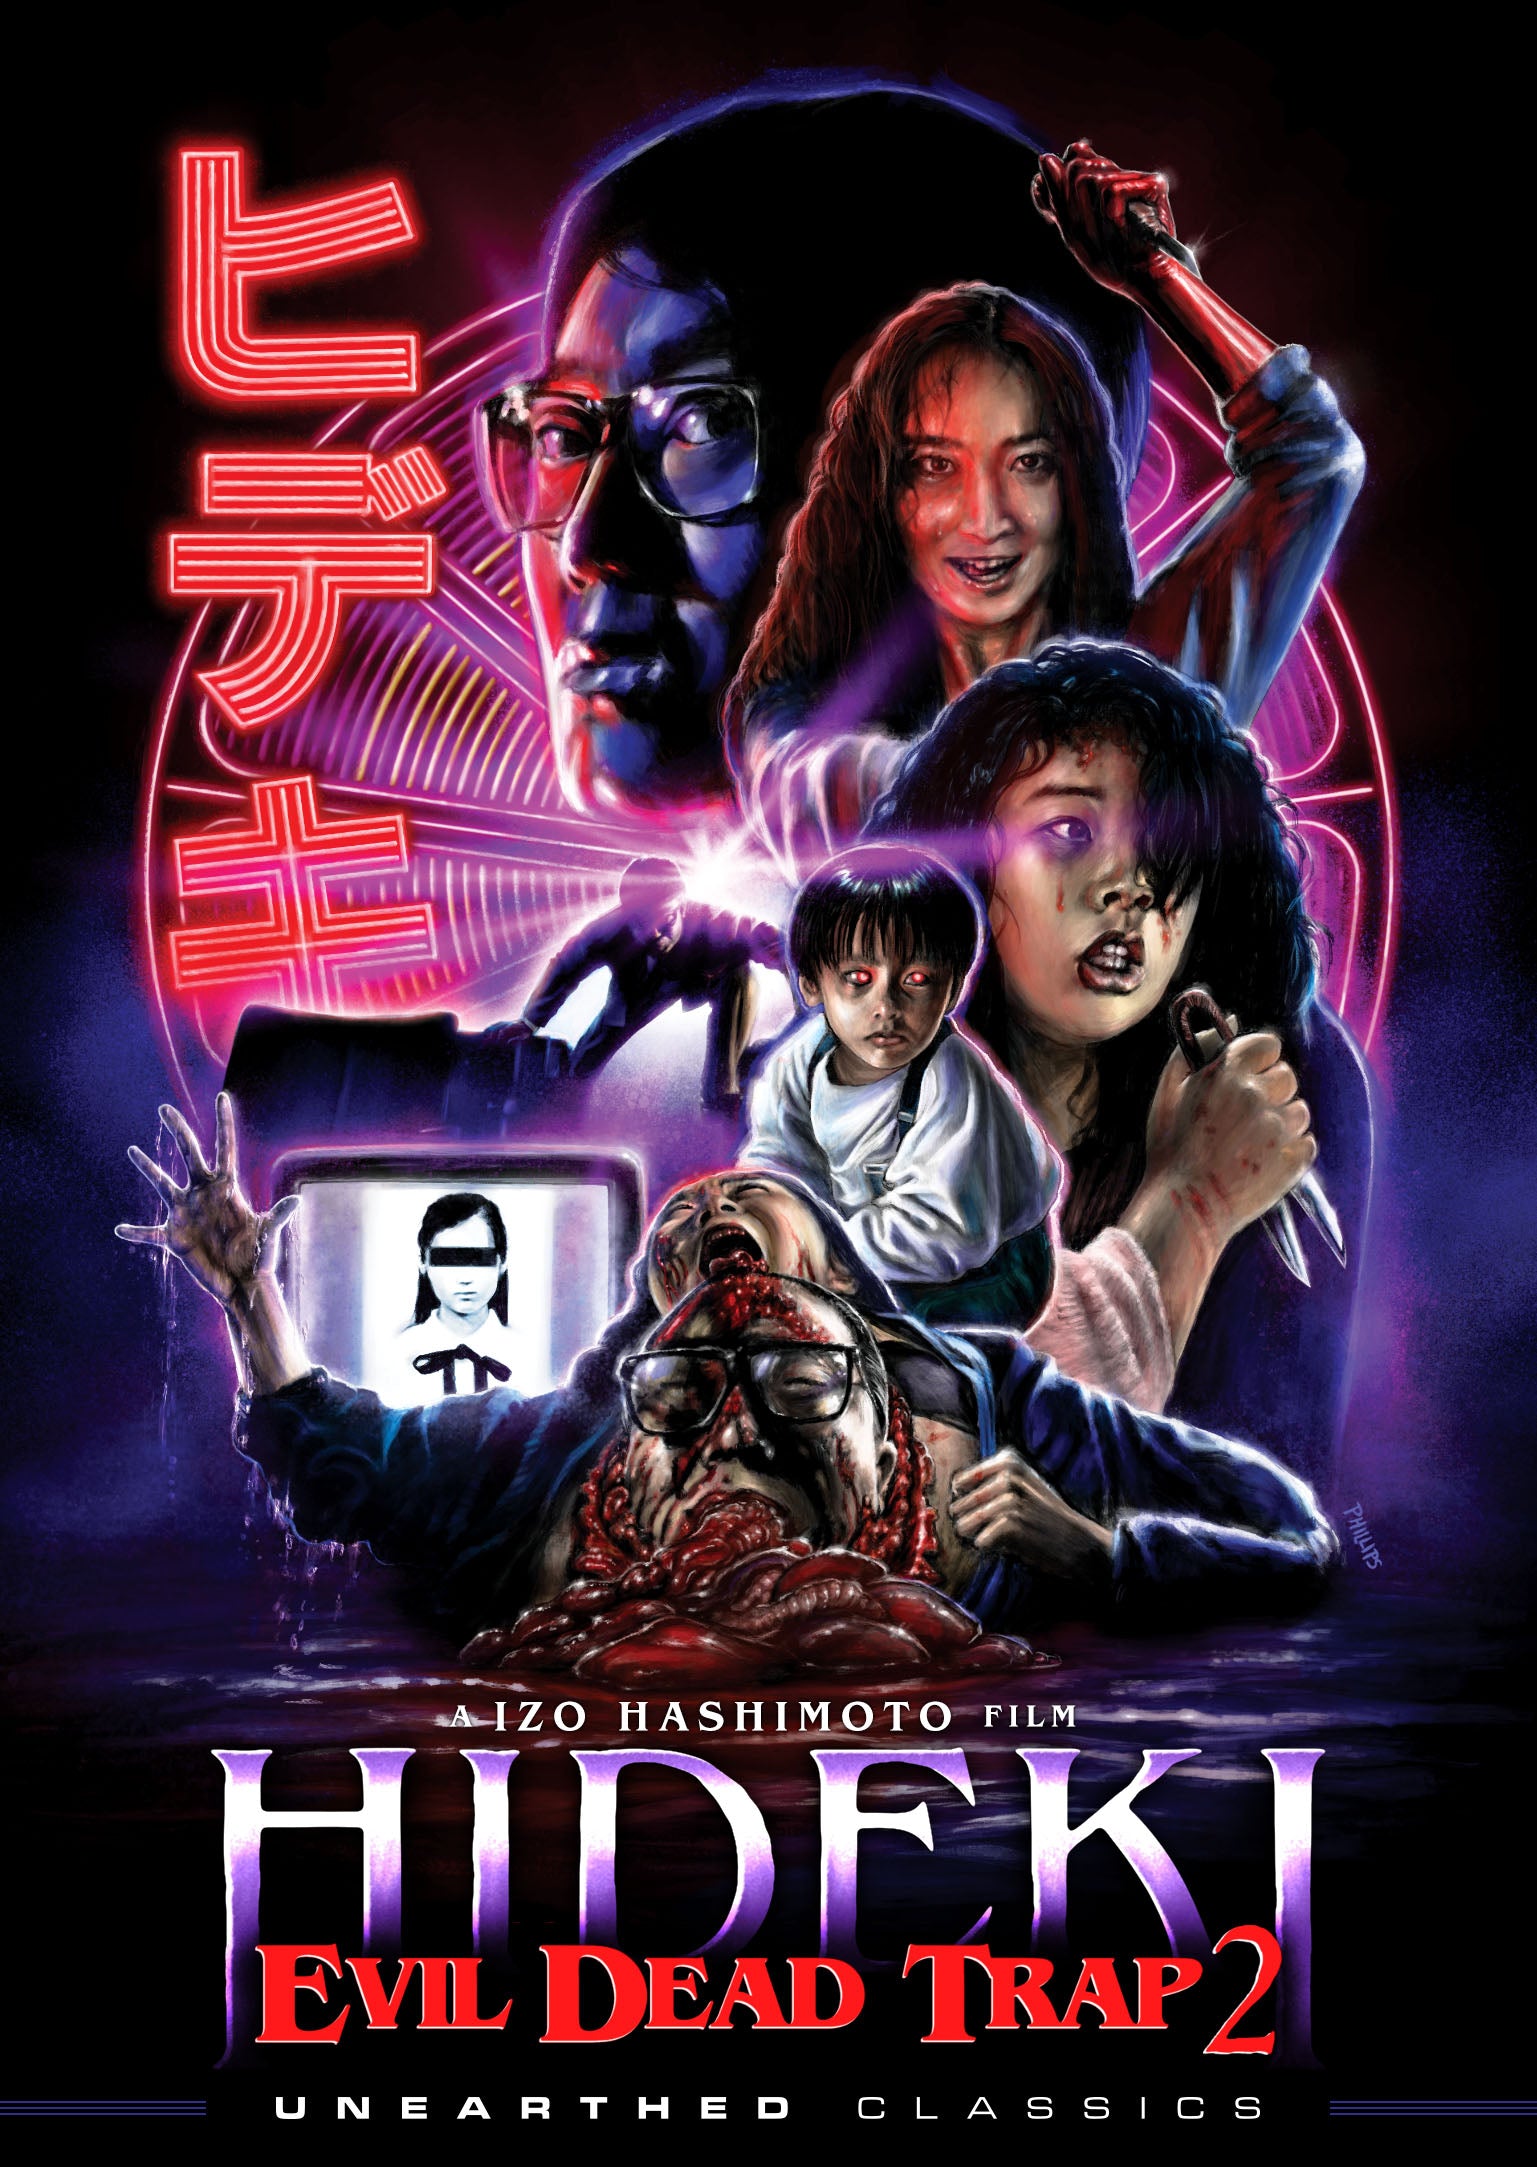 EVIL DEAD TRAP 2: HIDEKI DVD